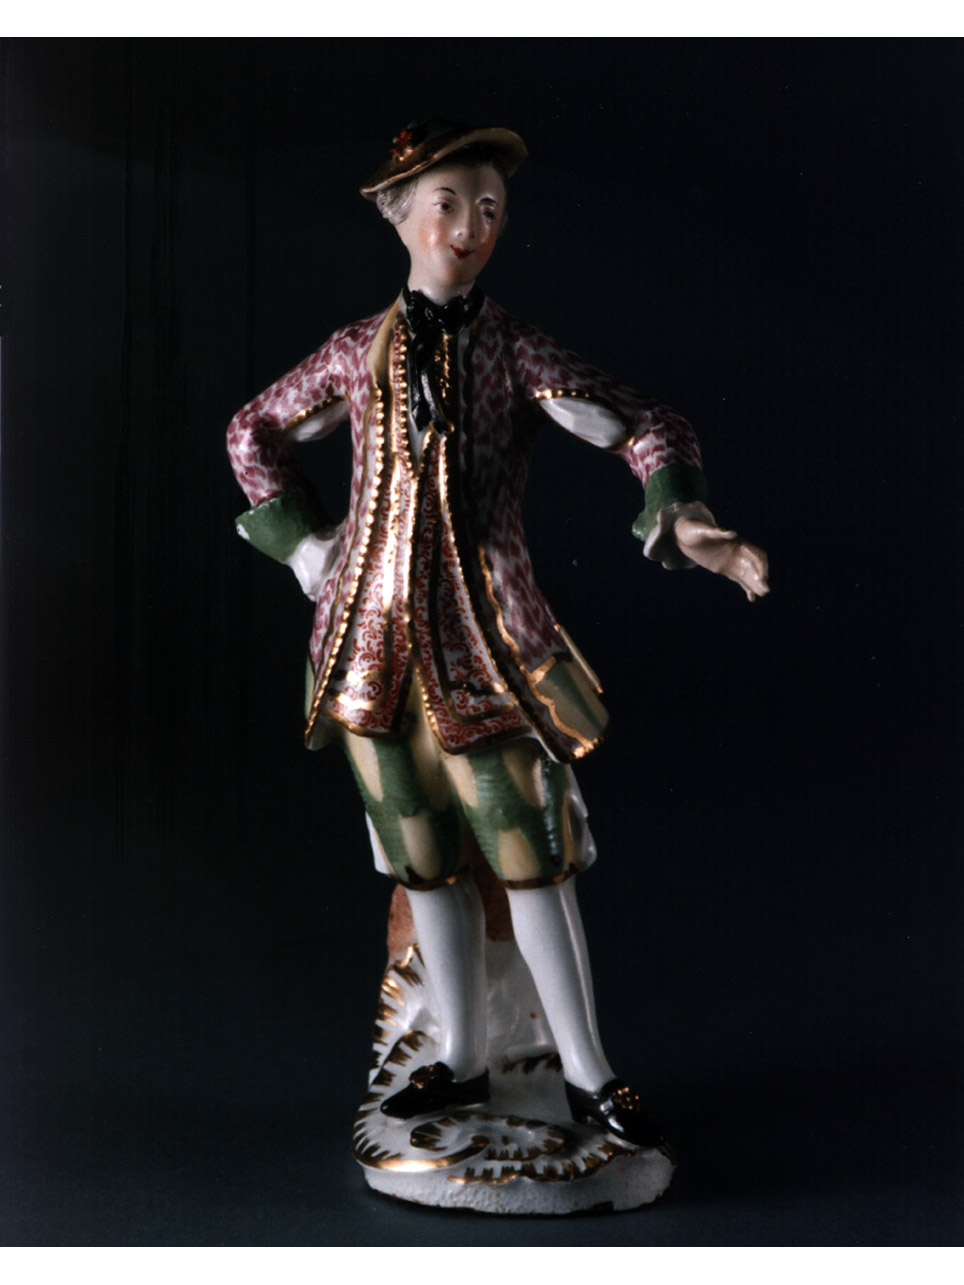 figura maschile (statuetta) - manifattura viennese (sec. XVIII)